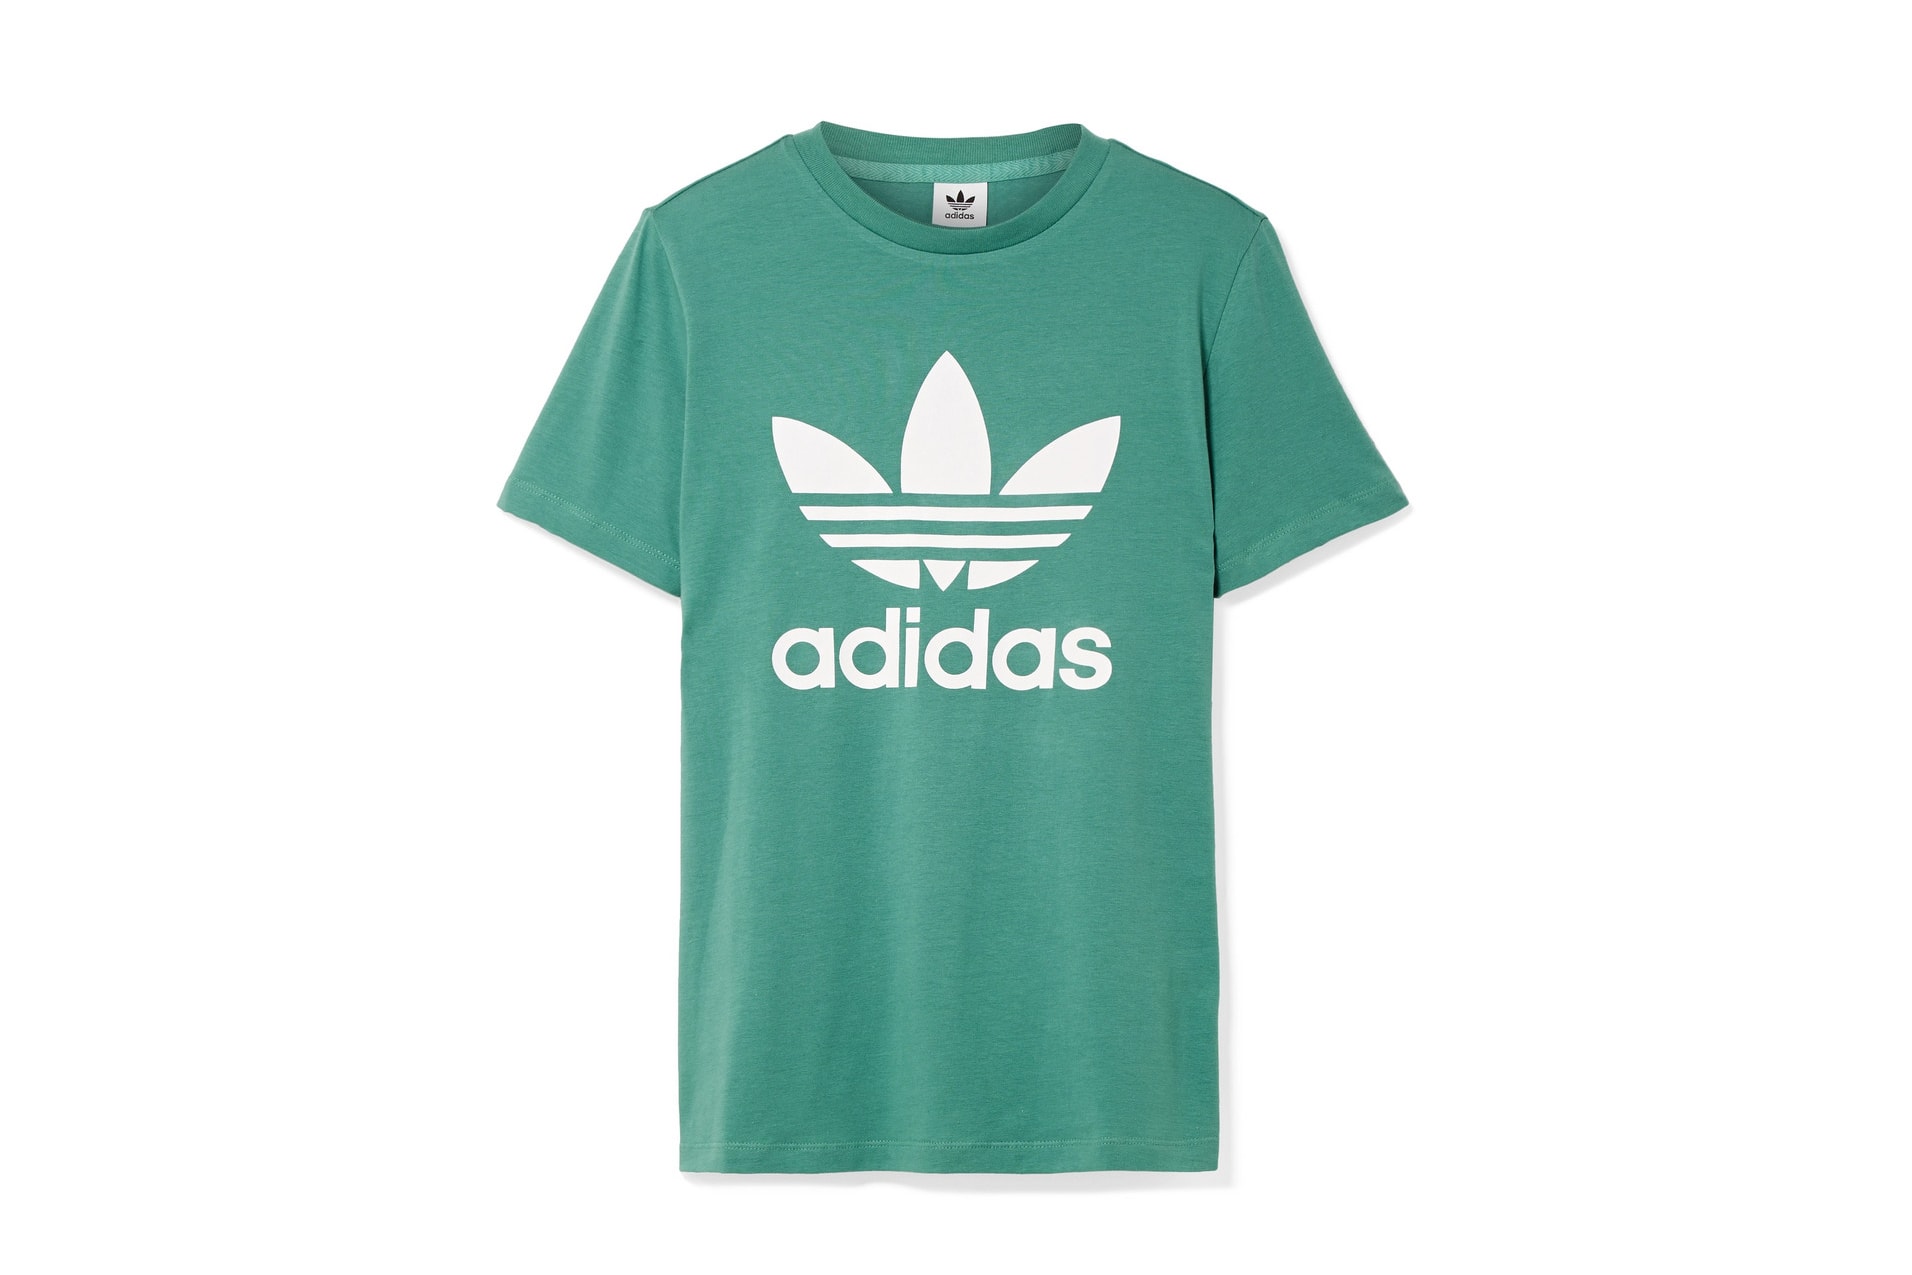 adidas Originals Trefoil in Logo | Hypebae Green T-Shirt